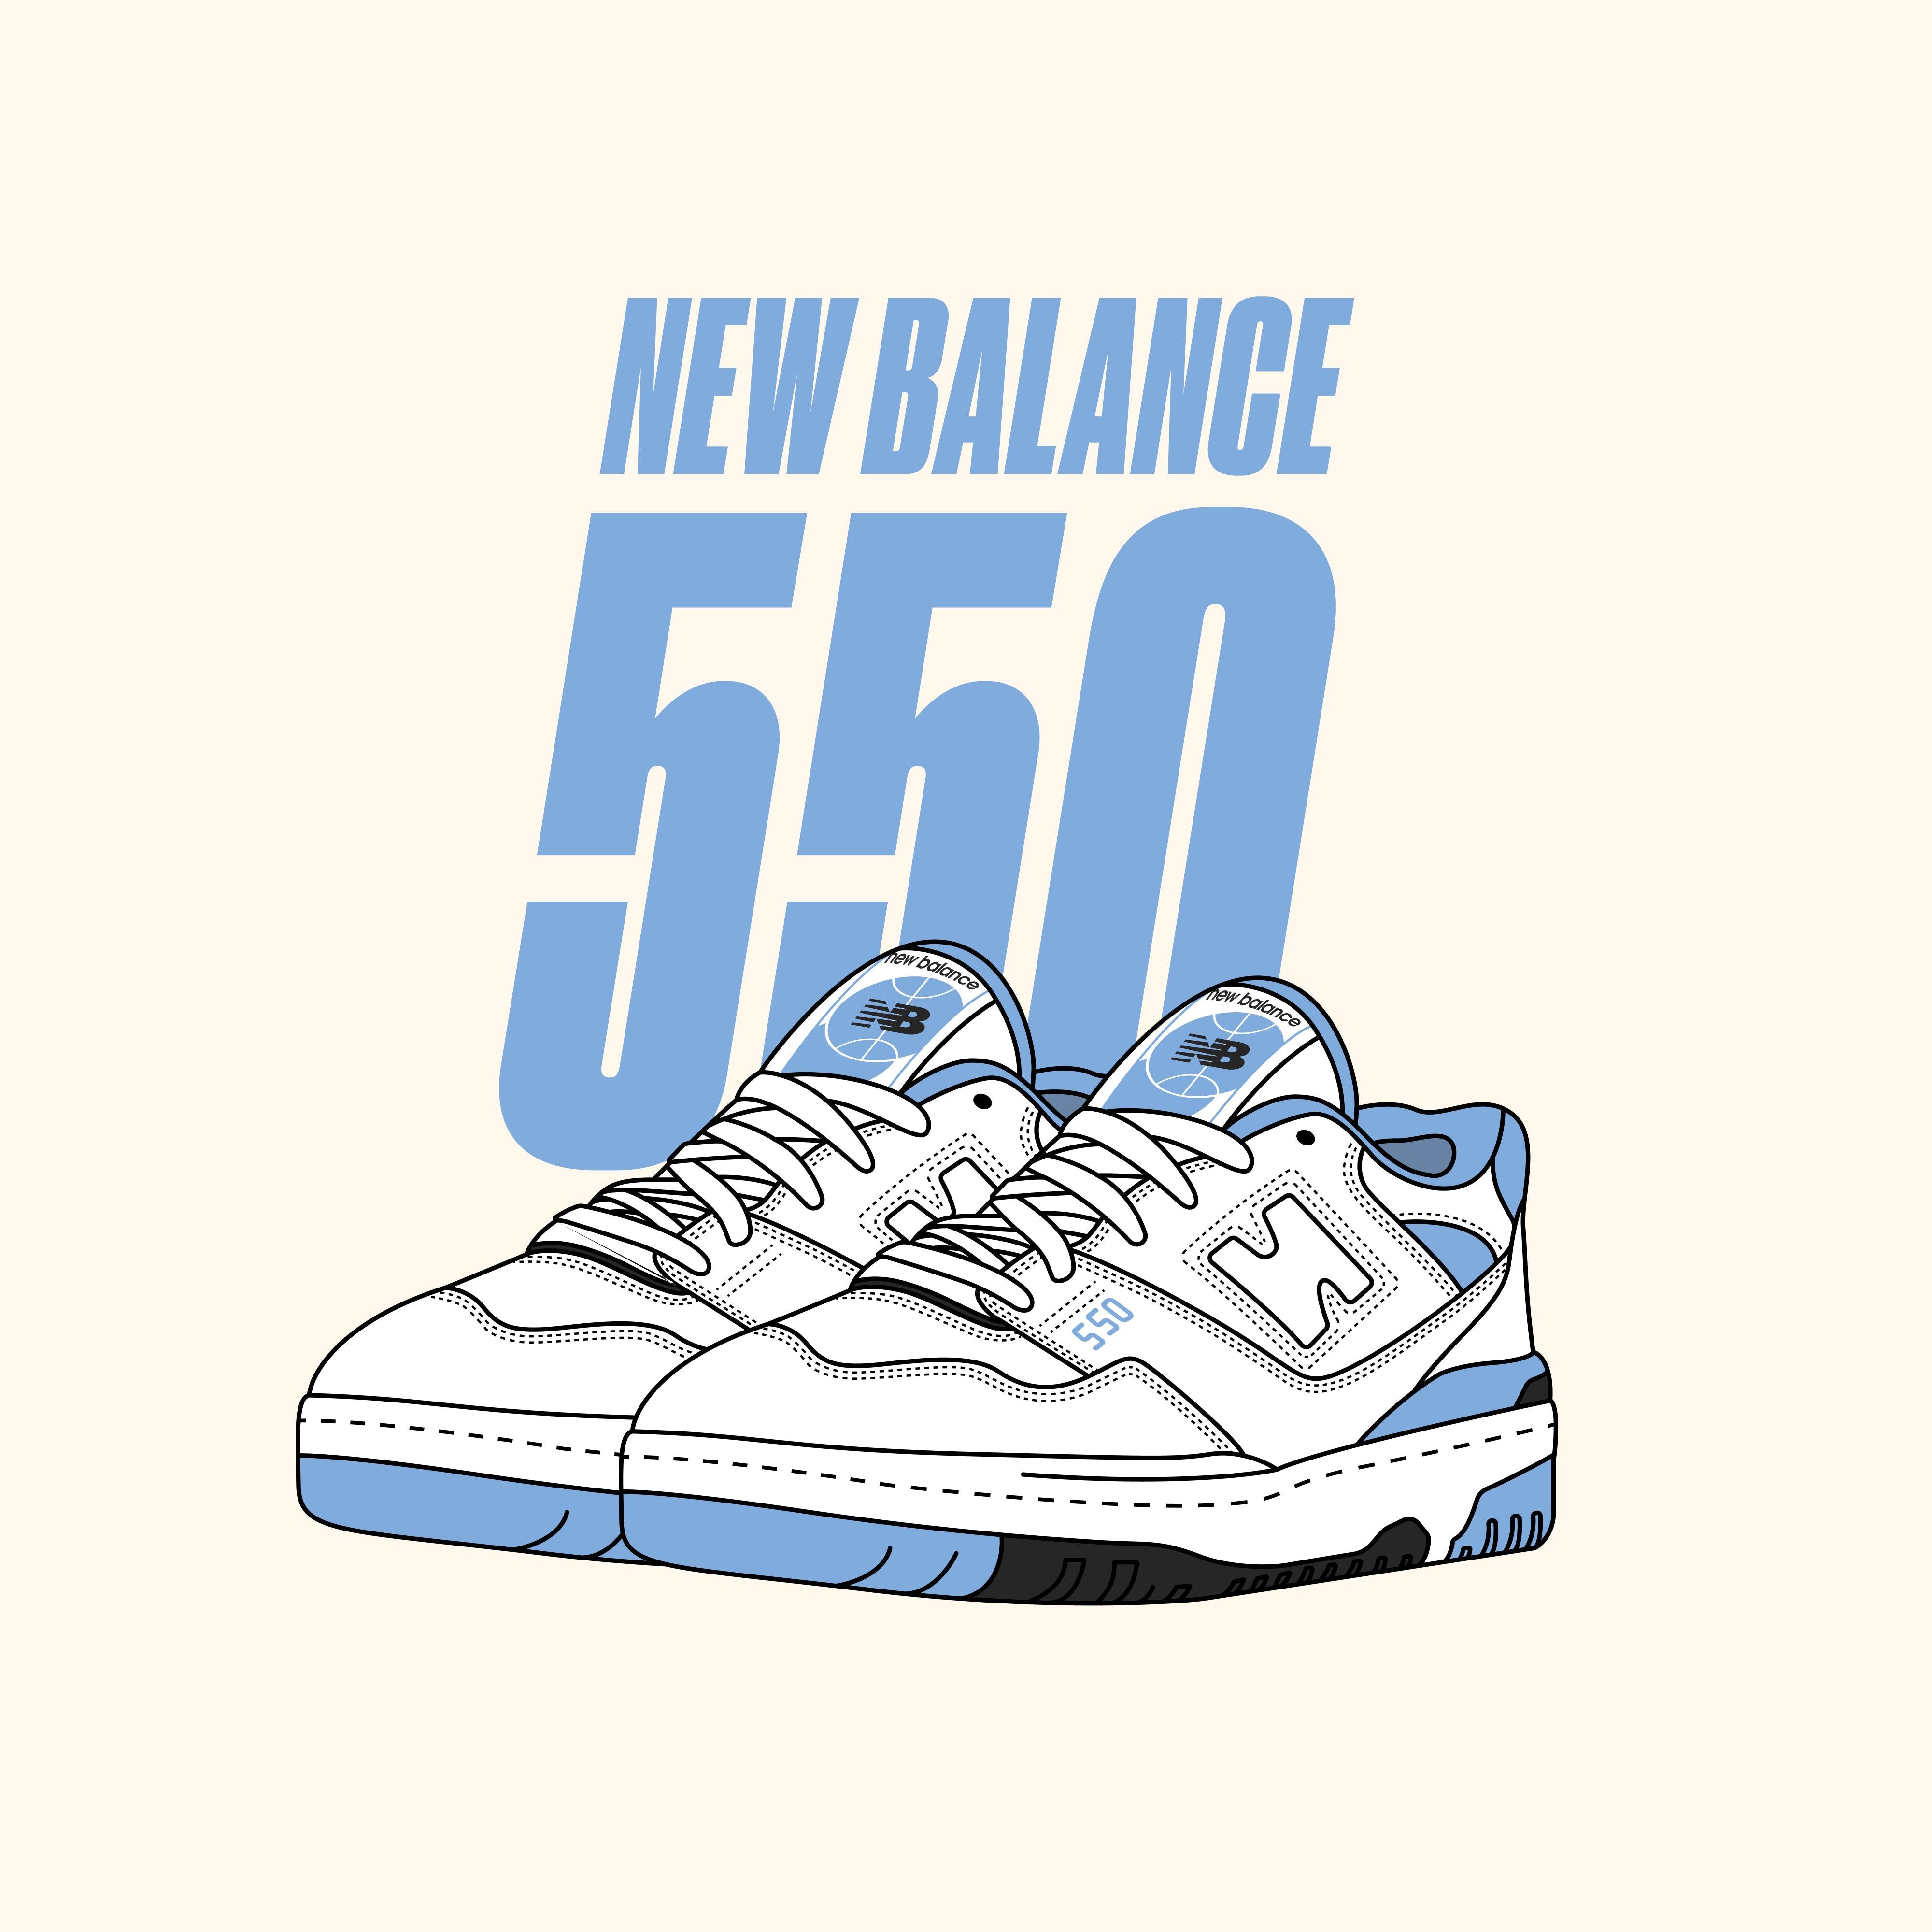 New Balance 550 Eli Aiko